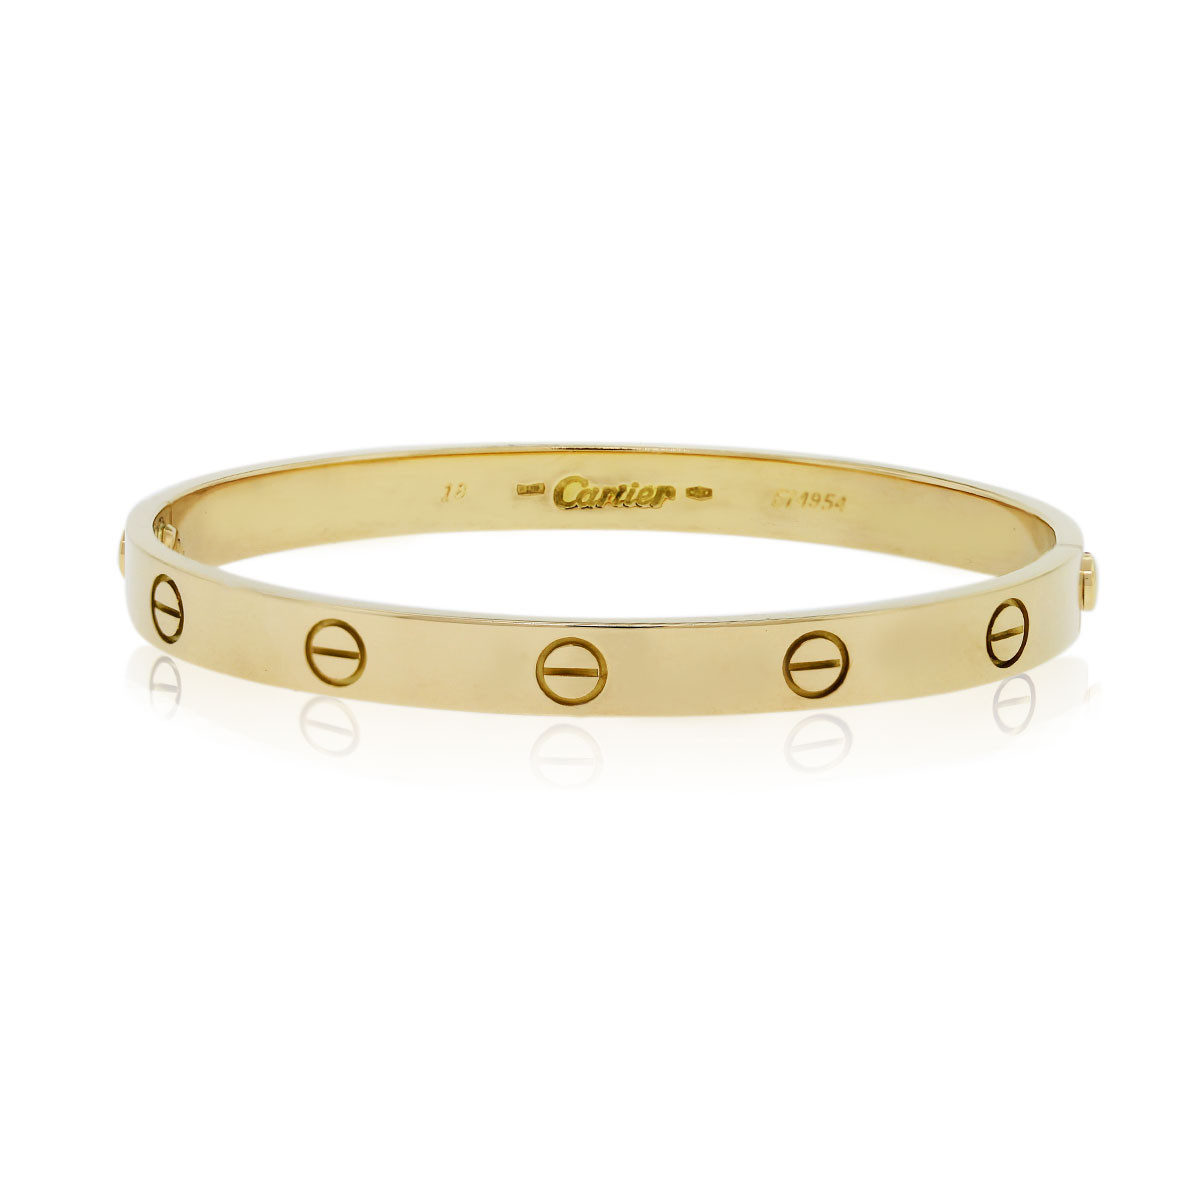 Gold Cartier Bracelet
 Cartier 18k Yellow Gold LOVE Bracelet Bangle Size 18